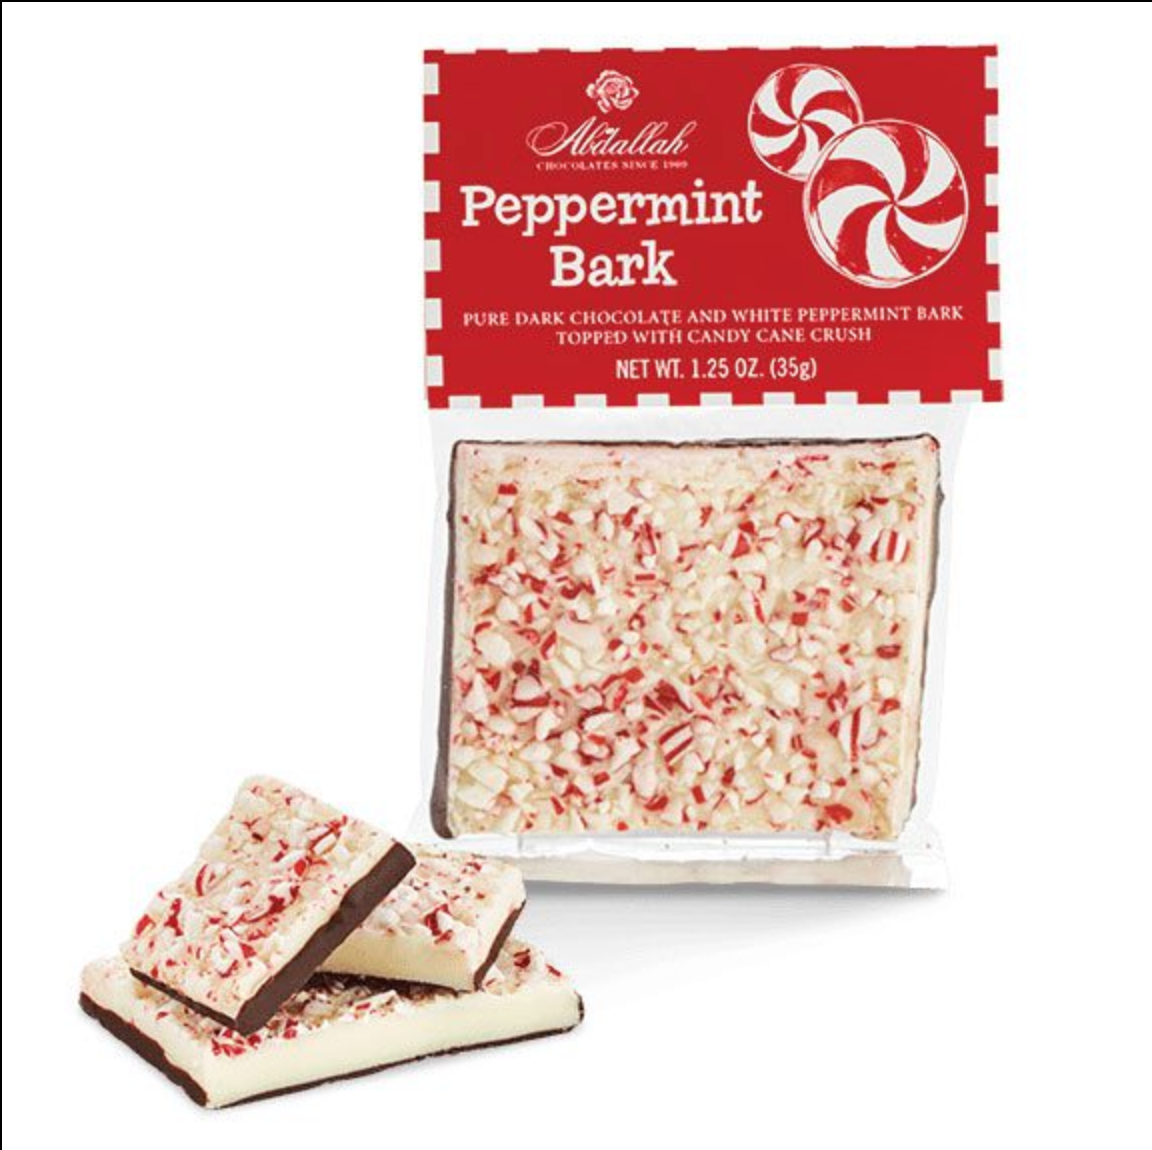 Peppermint Bark